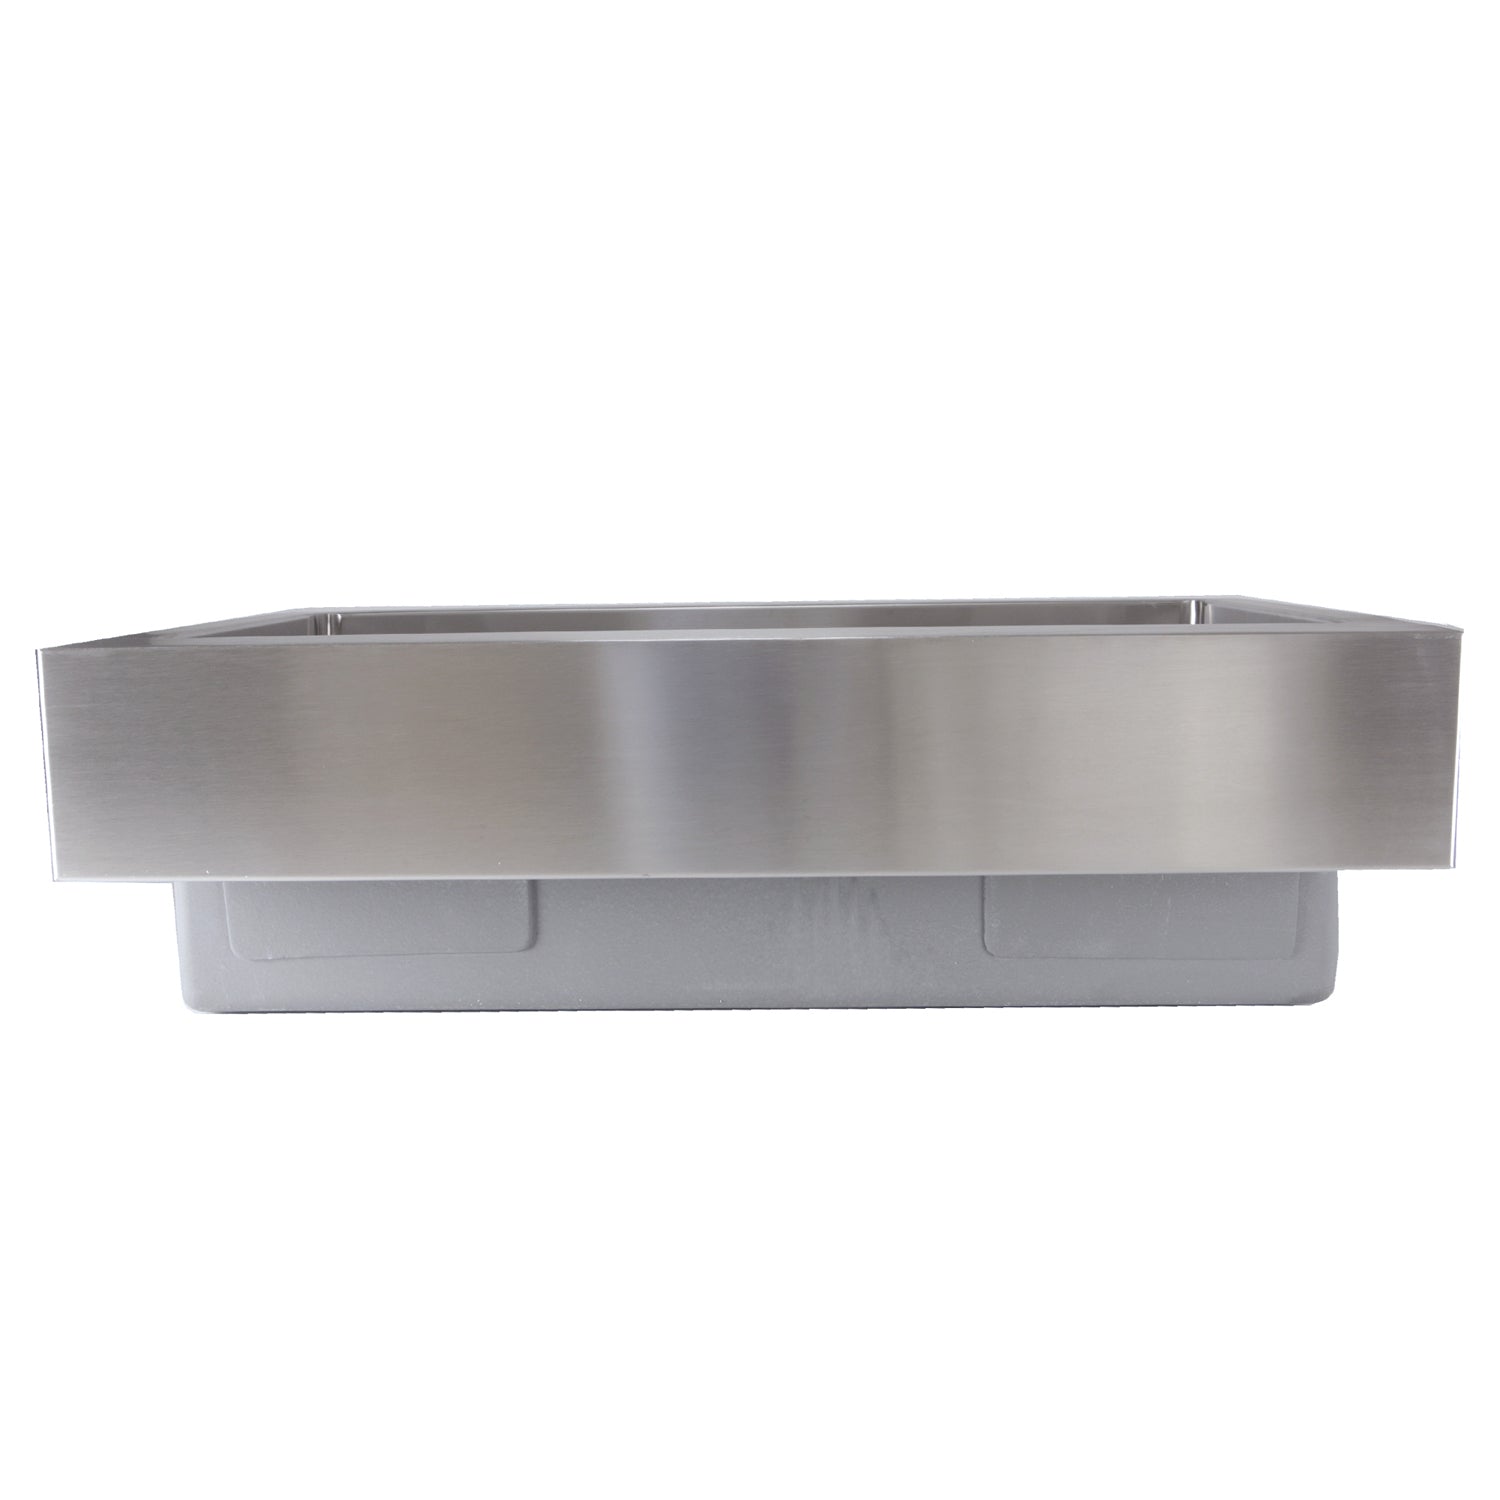 Nantucket Sinks EZApron33-5.5 RetroFit Single Bowl Undermount Stainless Steel Kitchen Sink with 5.5" Apron Front